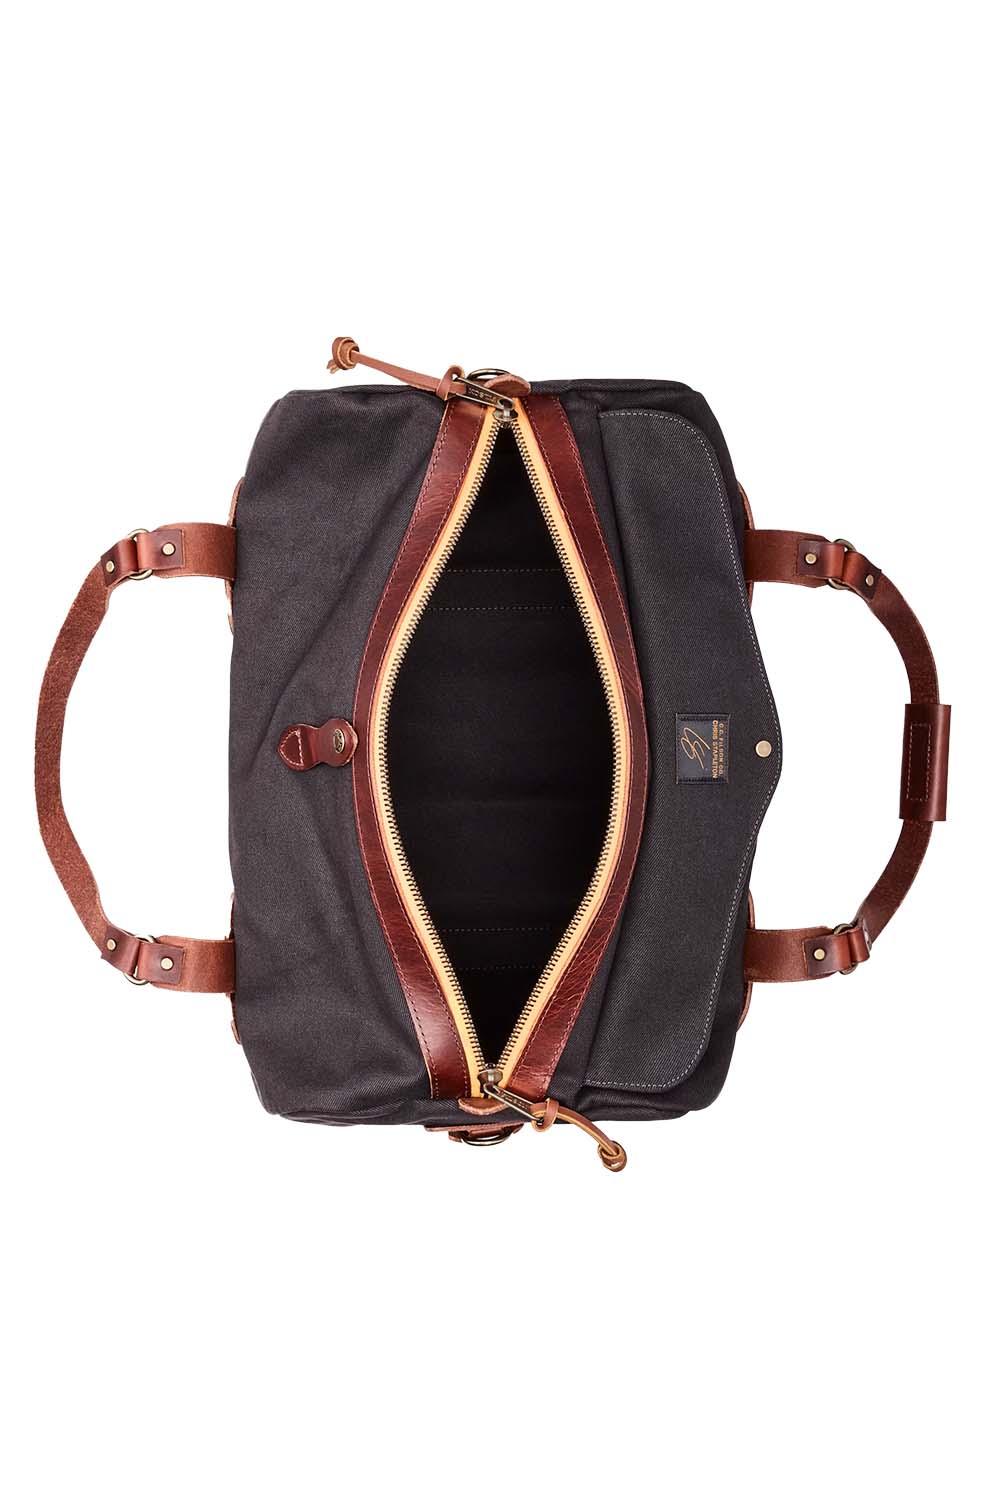 Filson - Traveller Medium Duffle Bag - Cinder - Inside